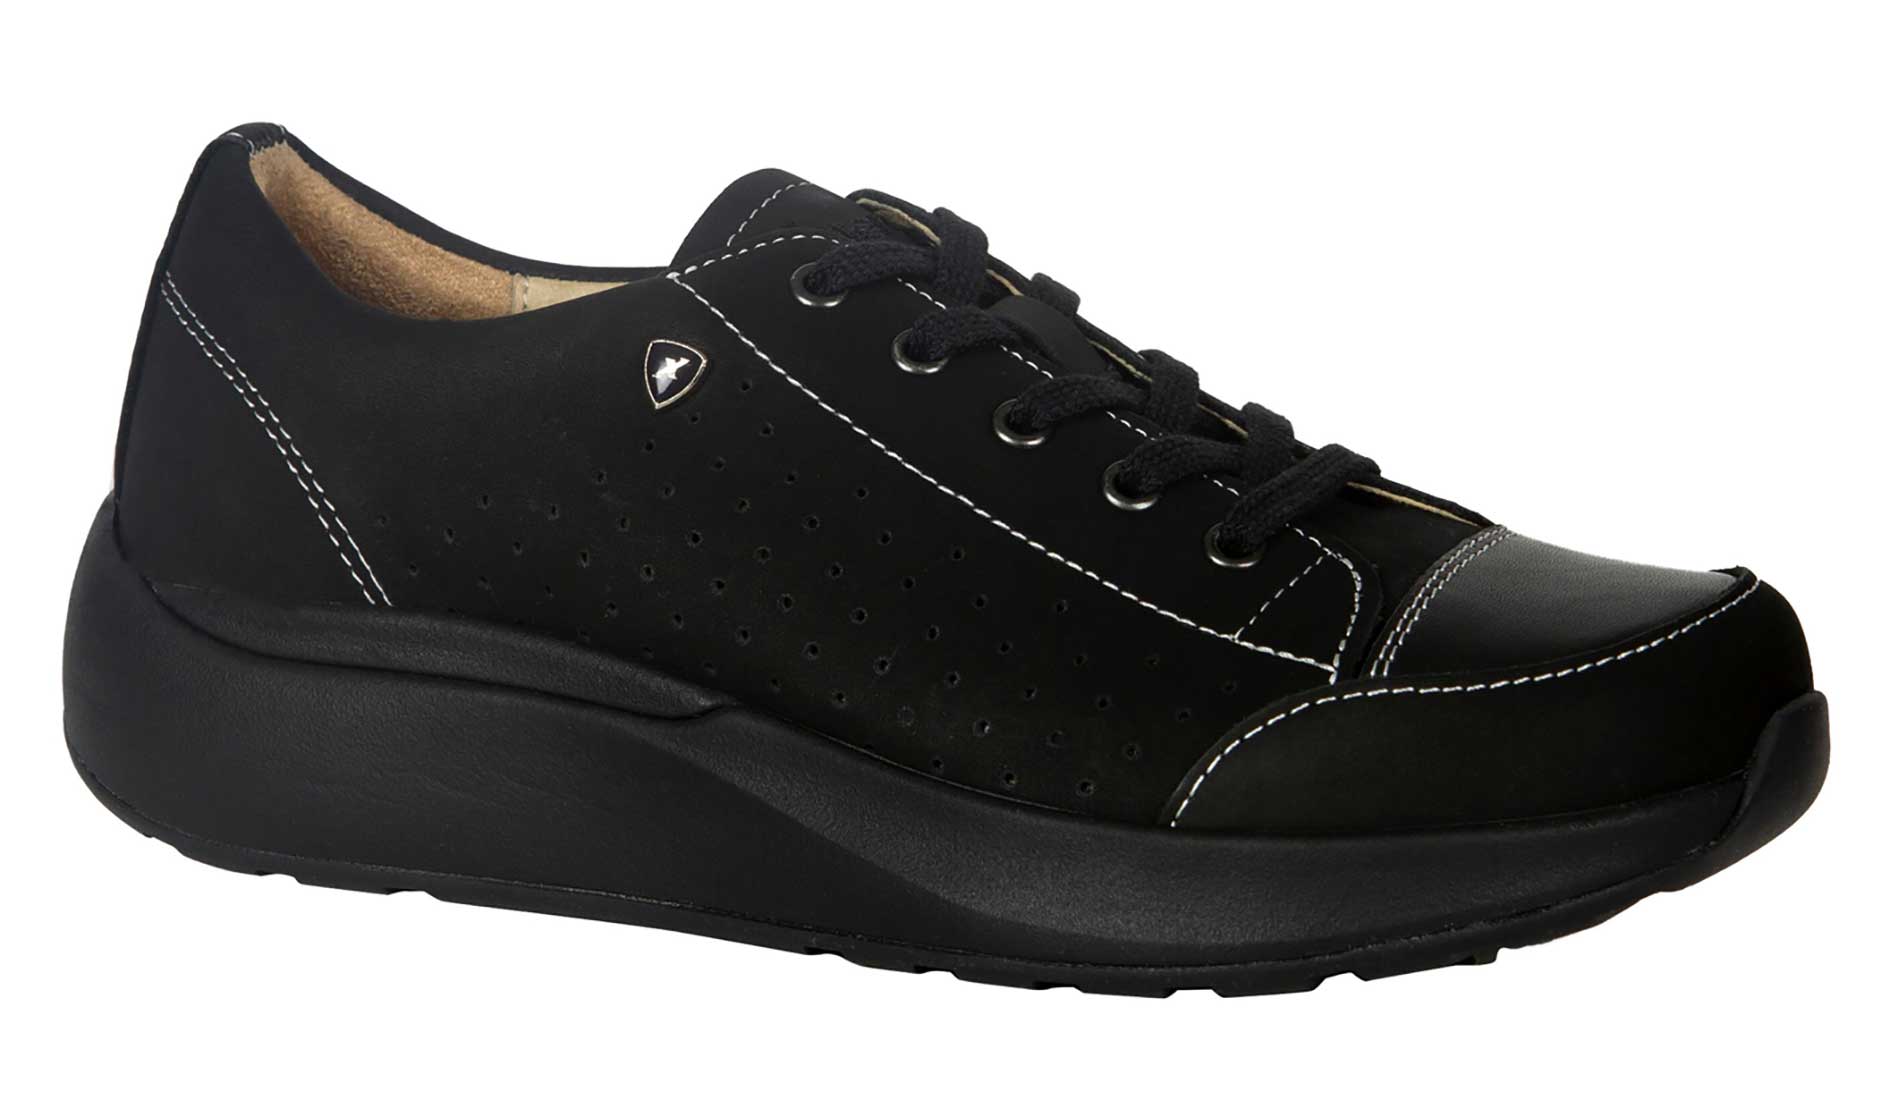 Xelero Shoes Heidi X22200  - Women's Comfort Therapeutic Shoe - Casual & Walking Shoe - Medium - Wide - Extra Depth For Orthotics